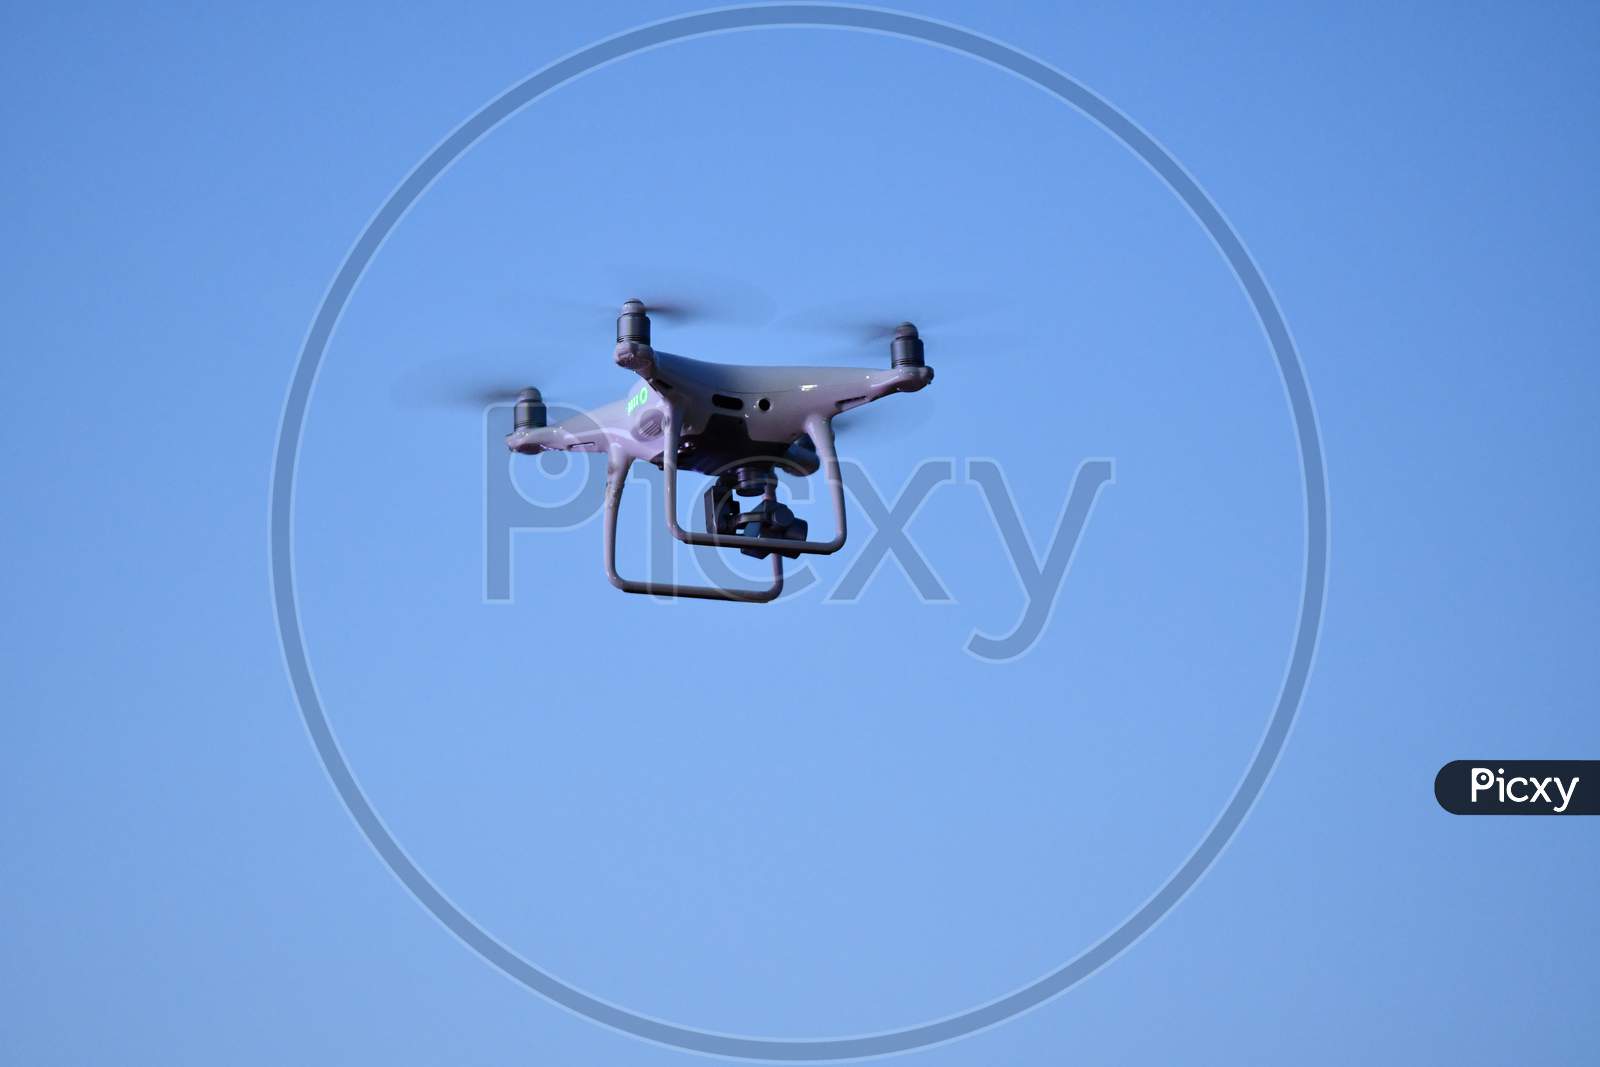 Drone found in kochi kerala india